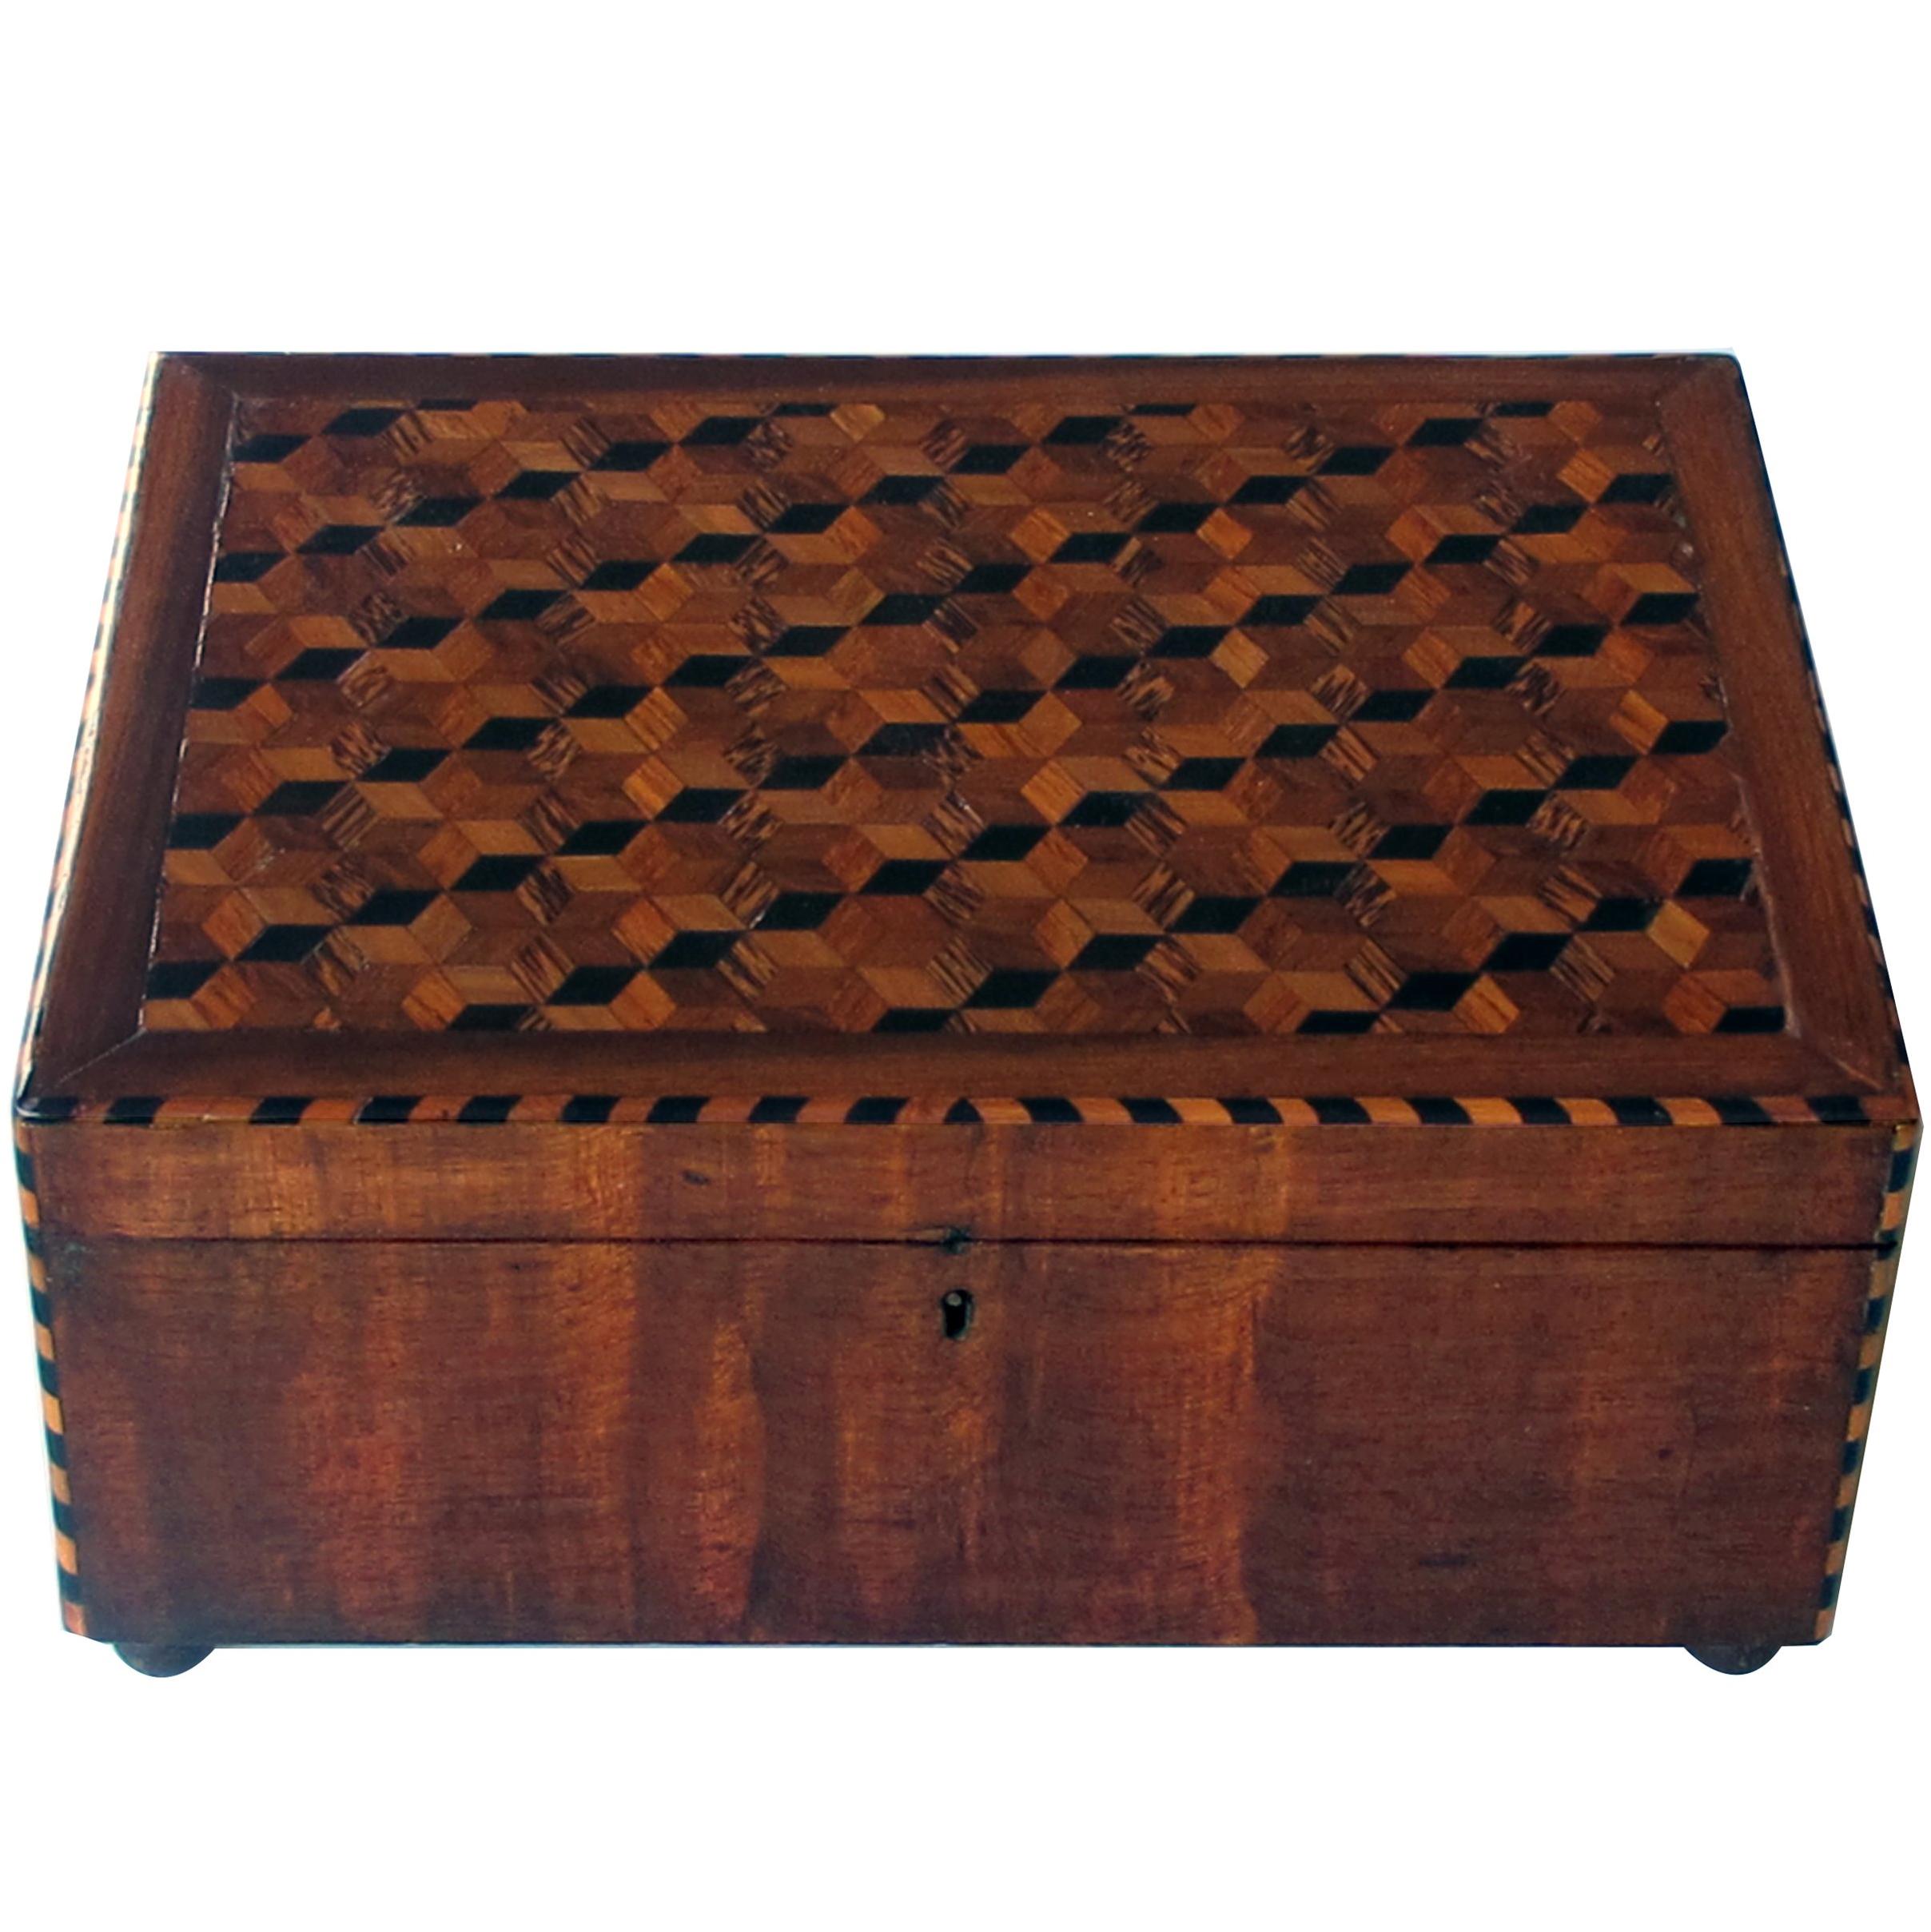 Handsome English William IV Mahogany Dressing Box with Tumbling Block Inlay